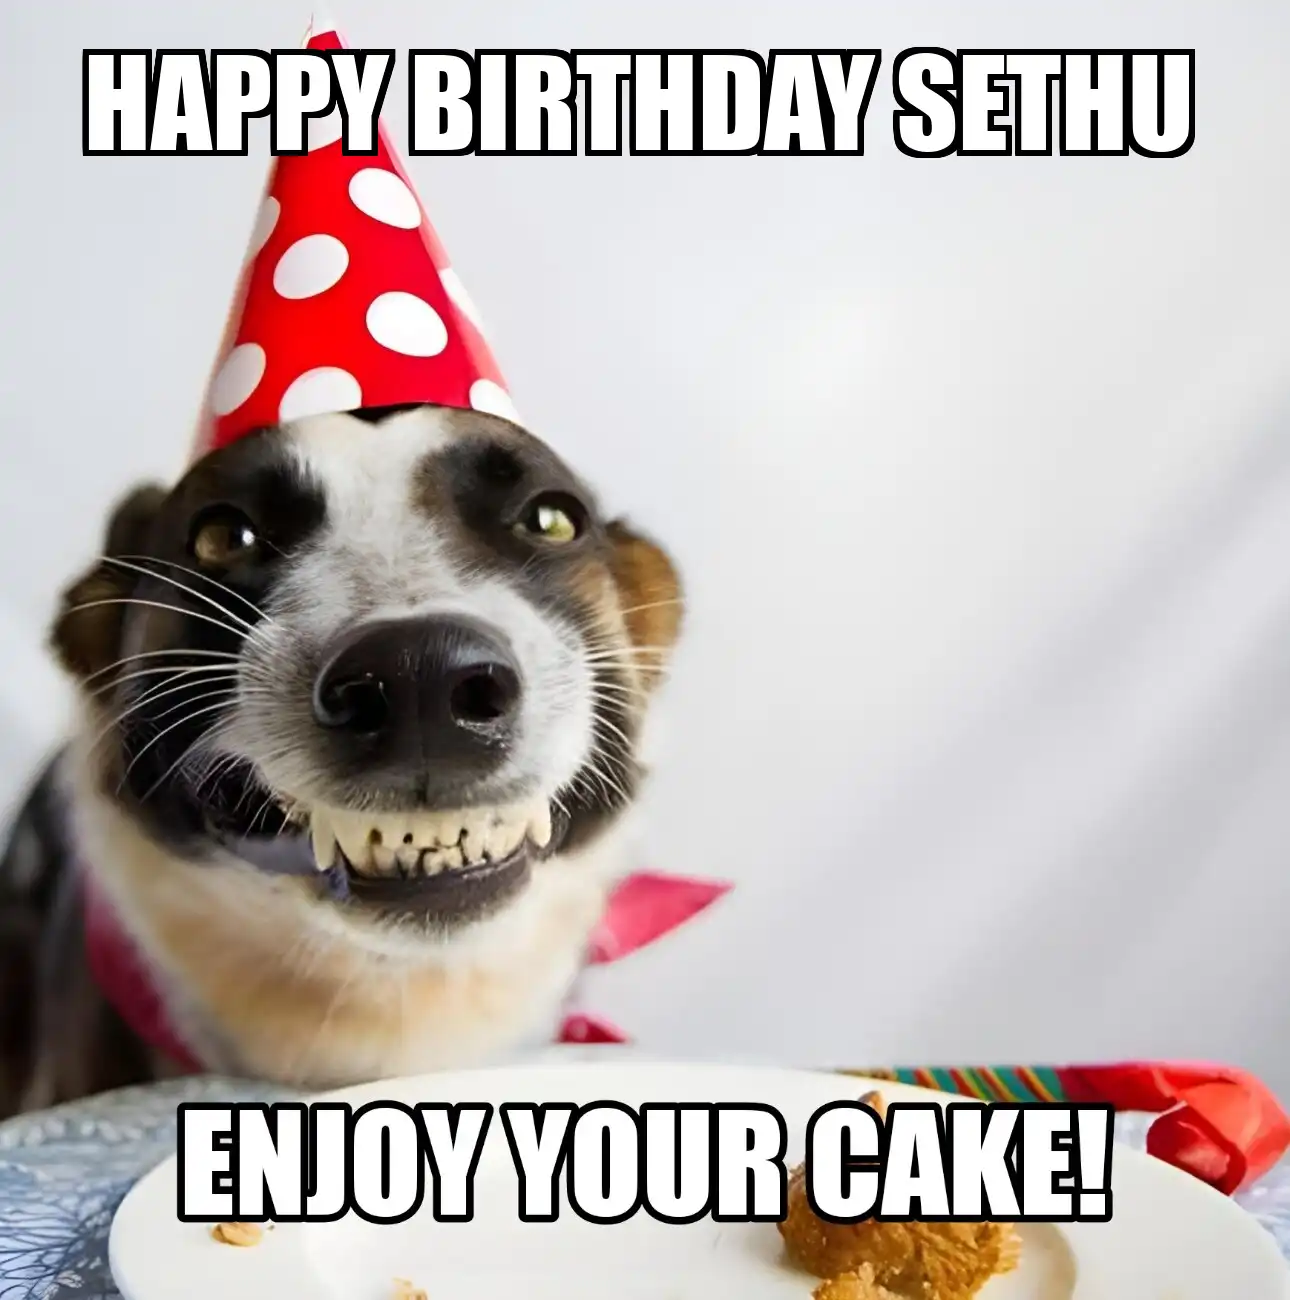 Happy Birthday Sethu Enjoy Your Cake Dog Meme